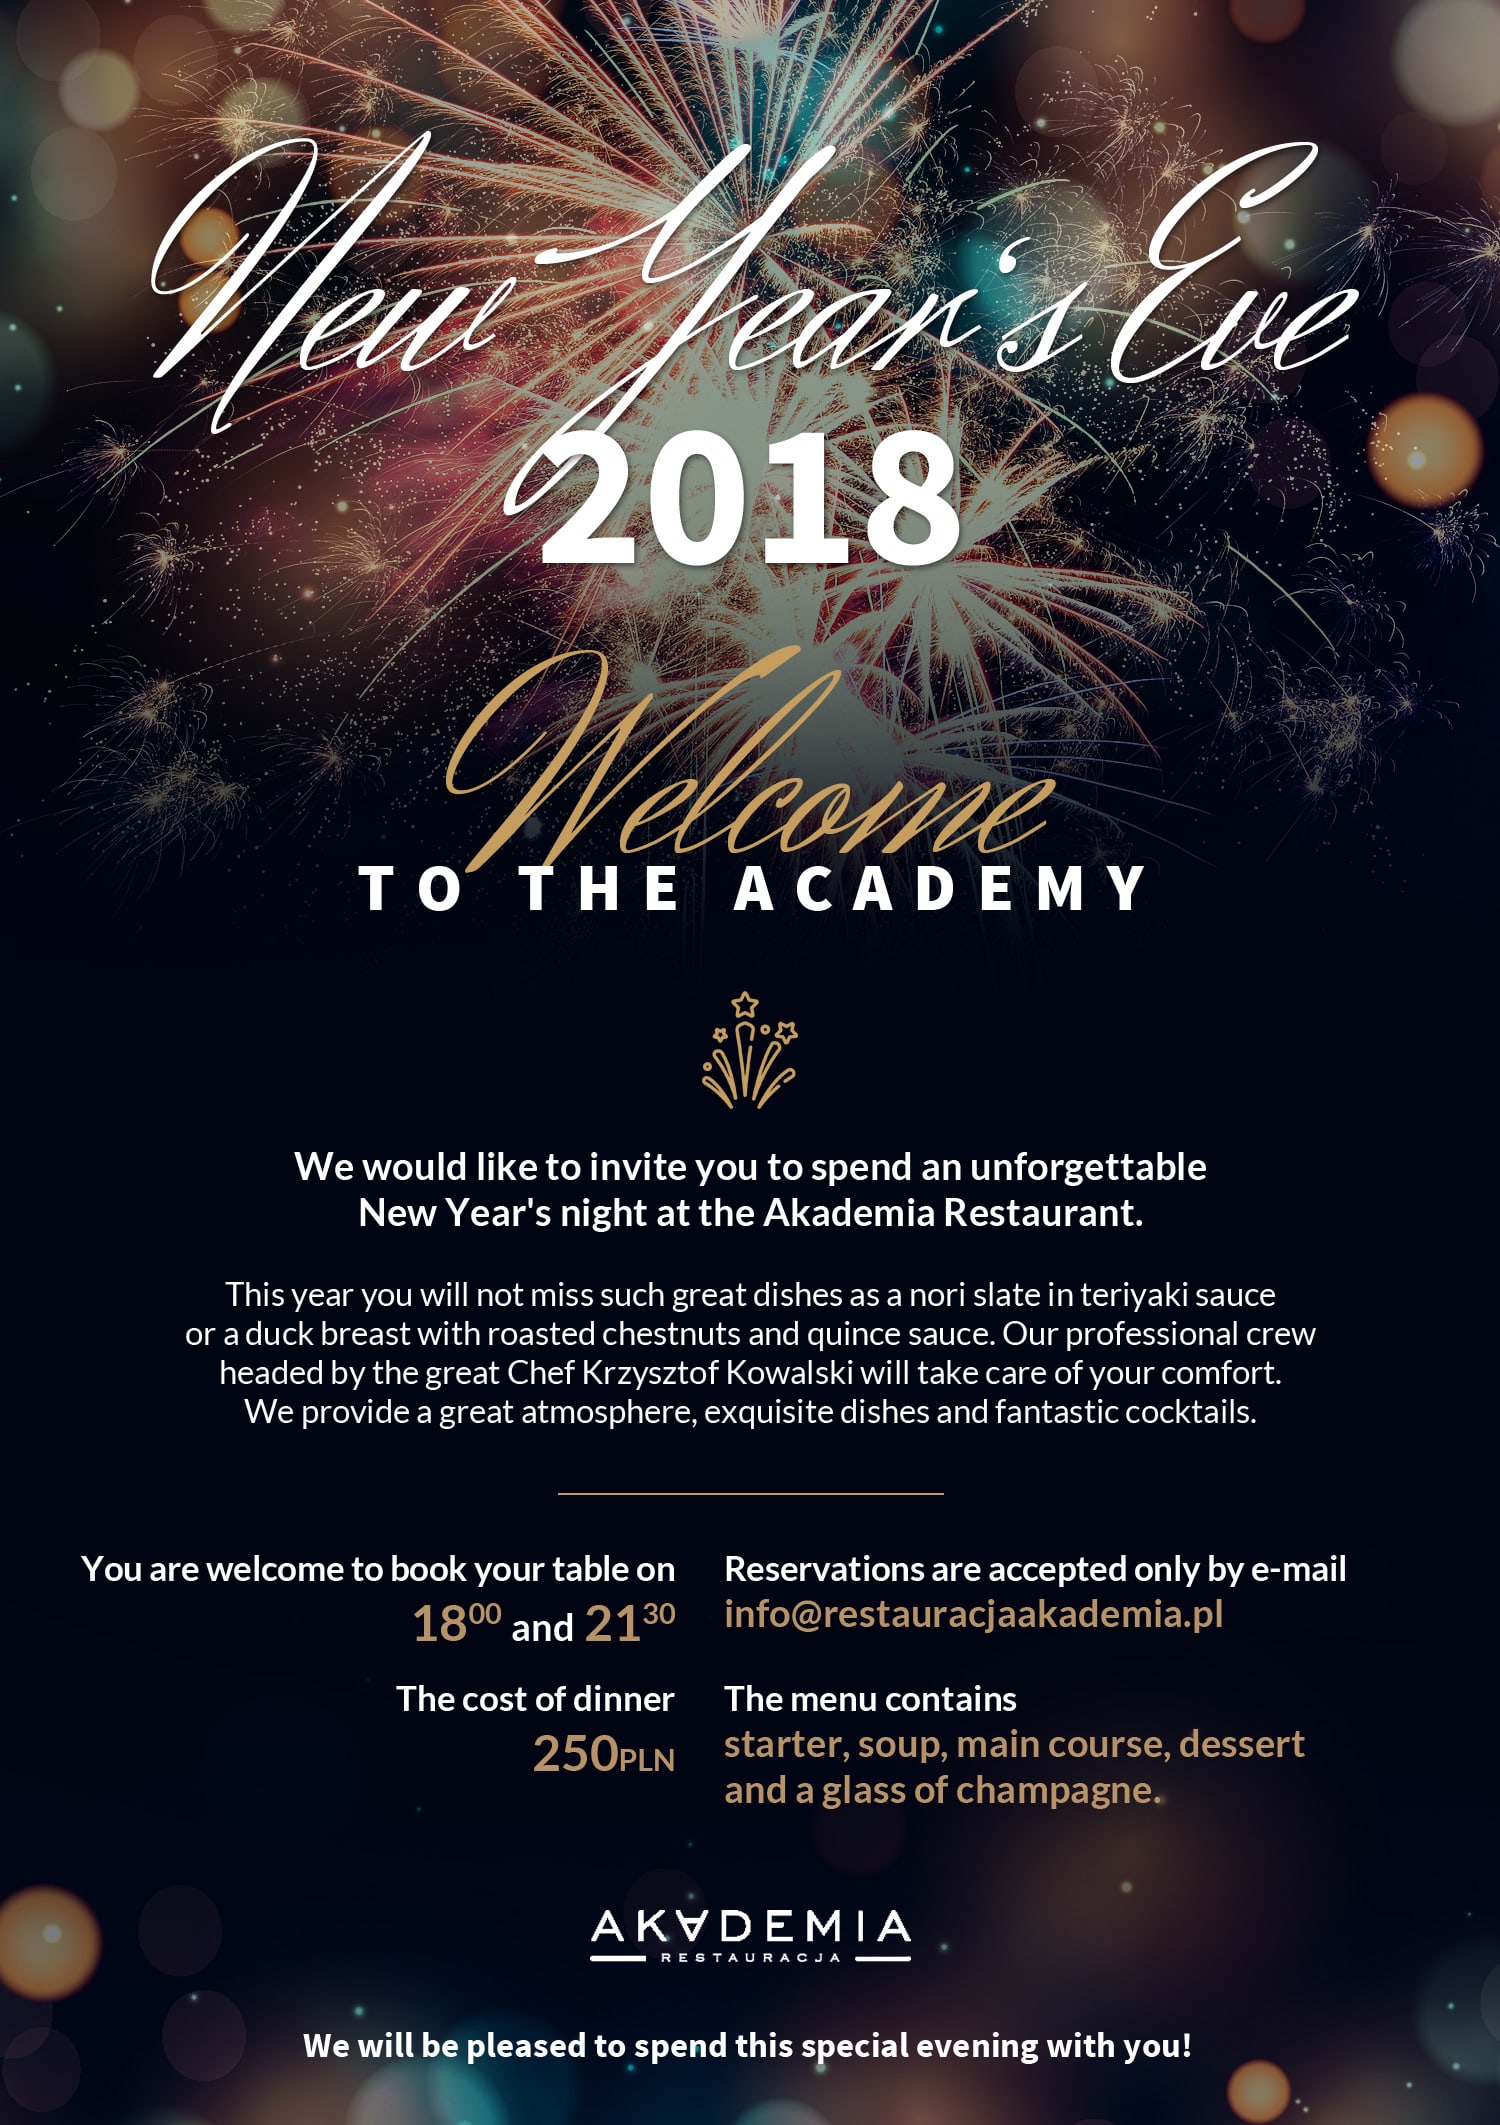 New Year’s Eve 2018 in Akademia Restaurant